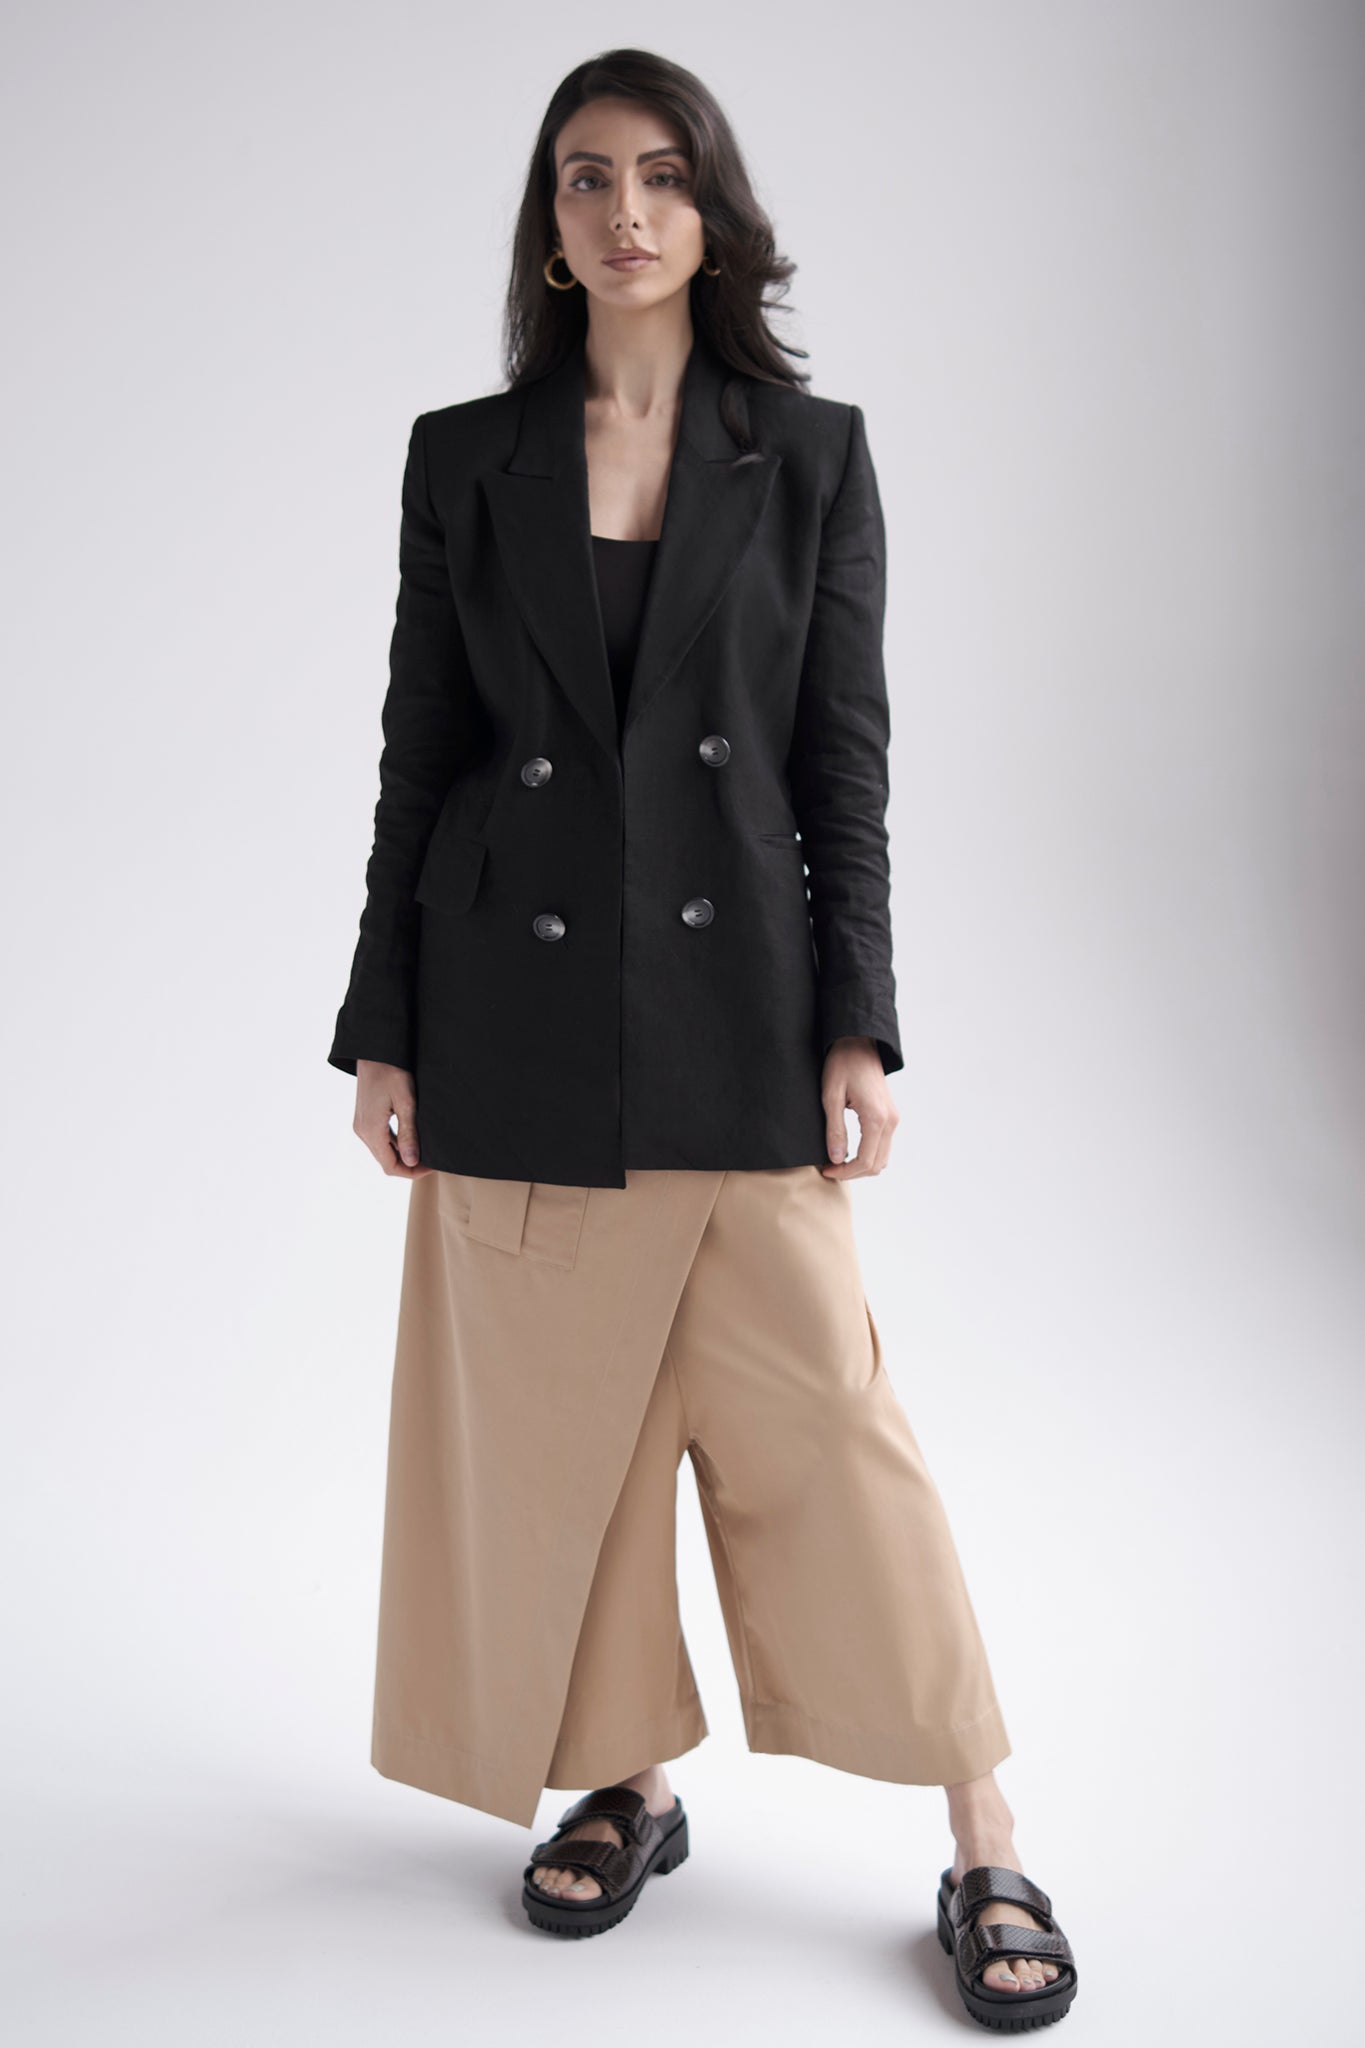 Linen blazer with pockets in black